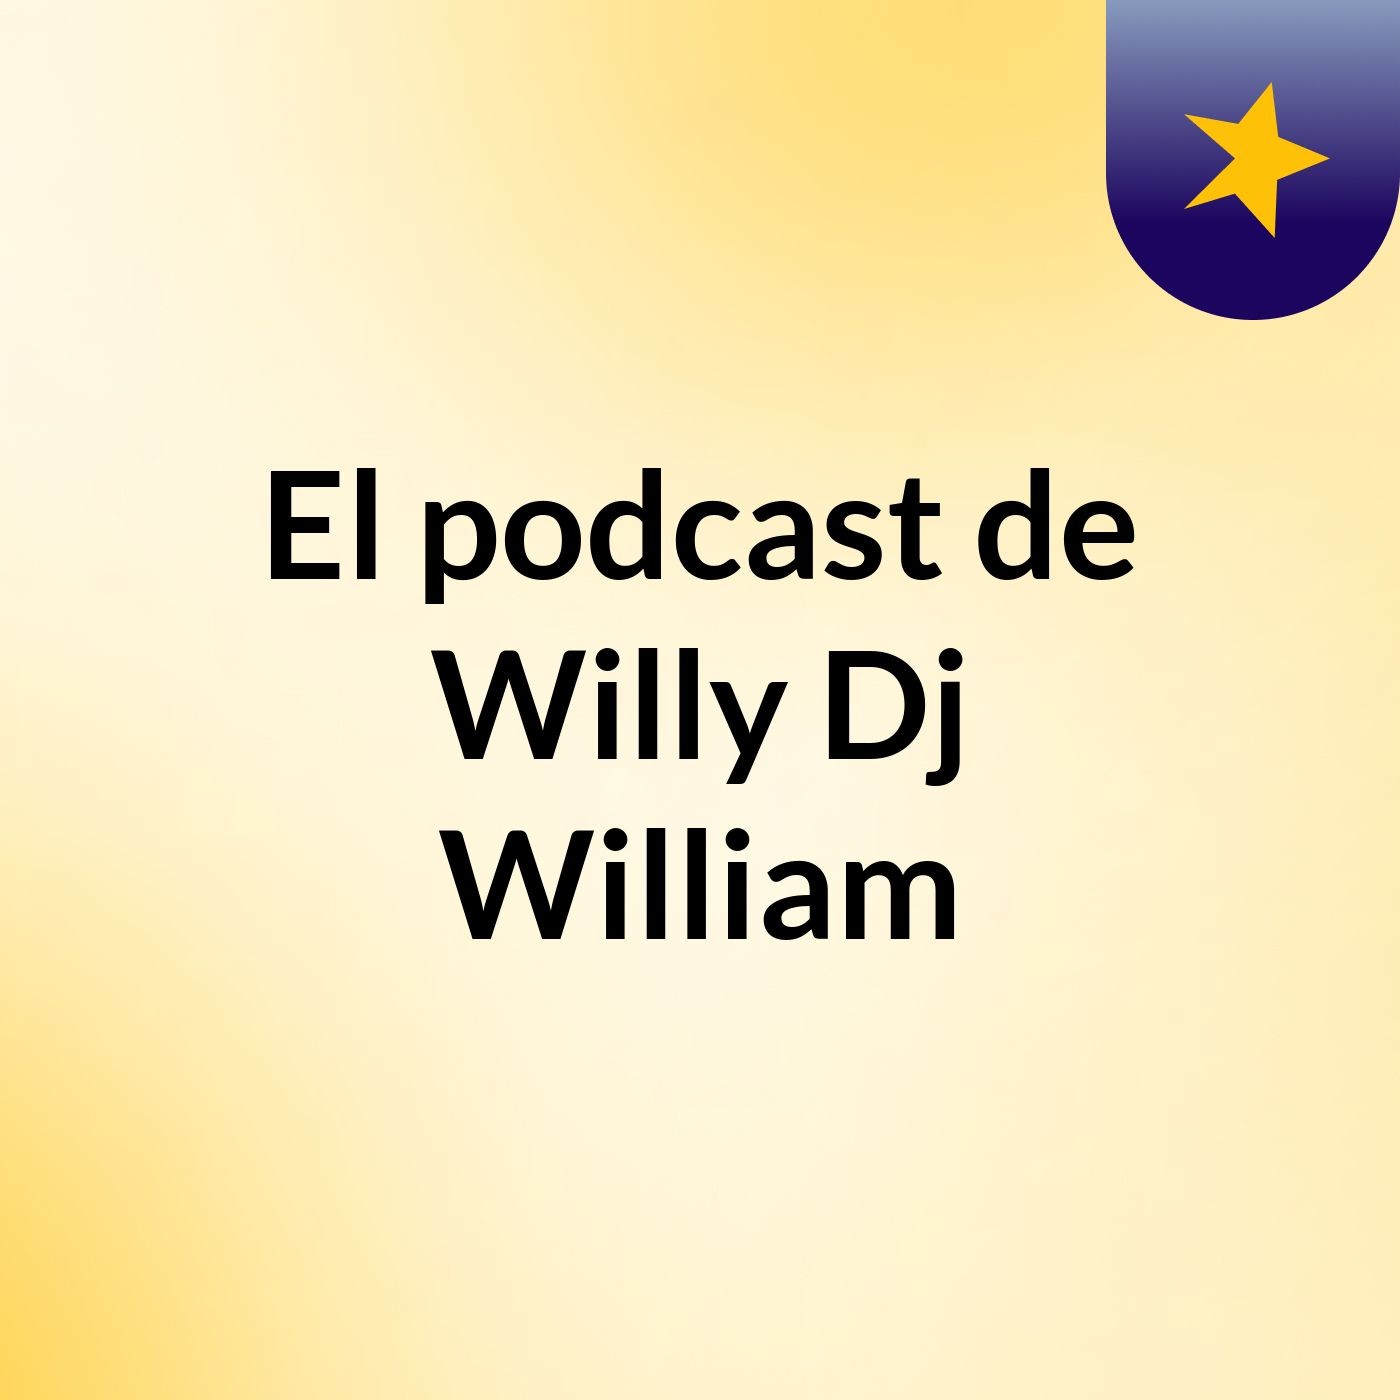 El podcast de Willy Dj William